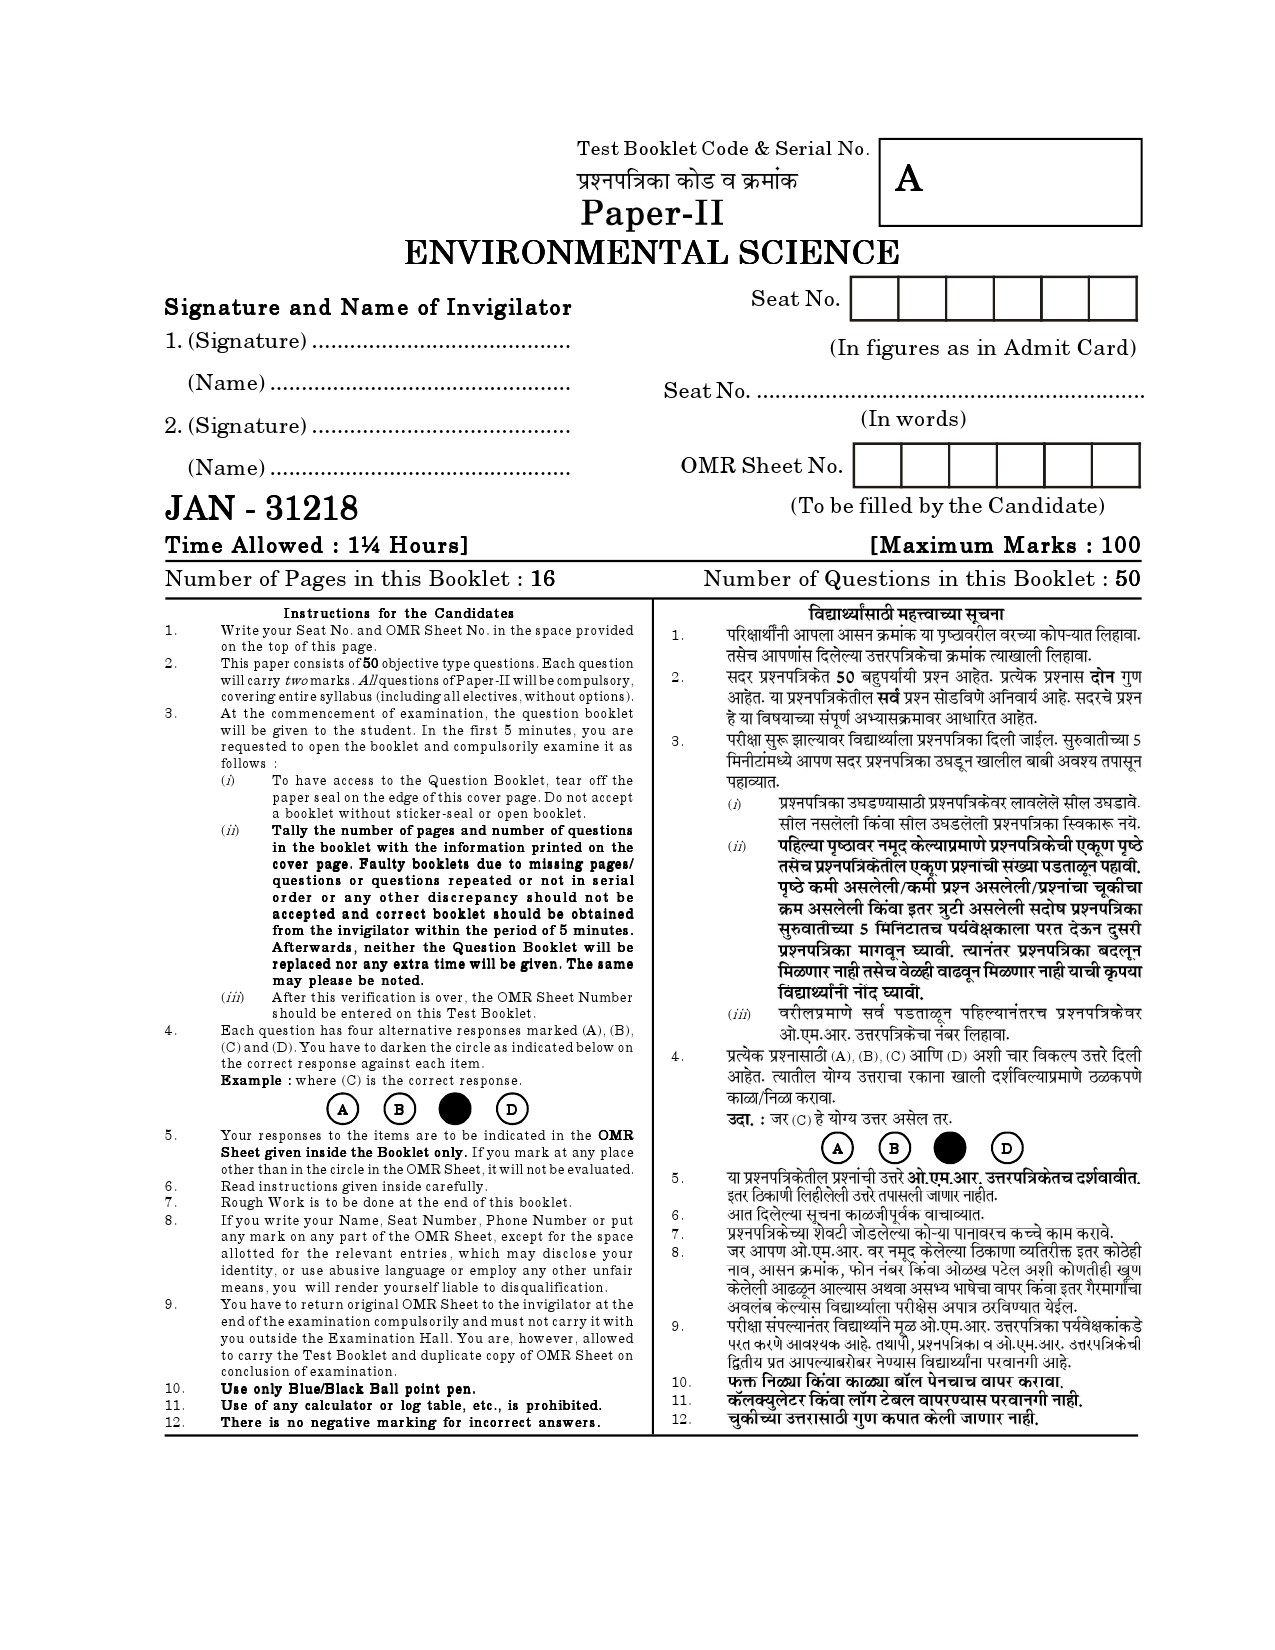 Maharashtra SET Environmental Sciences Question Paper II January 2018 1